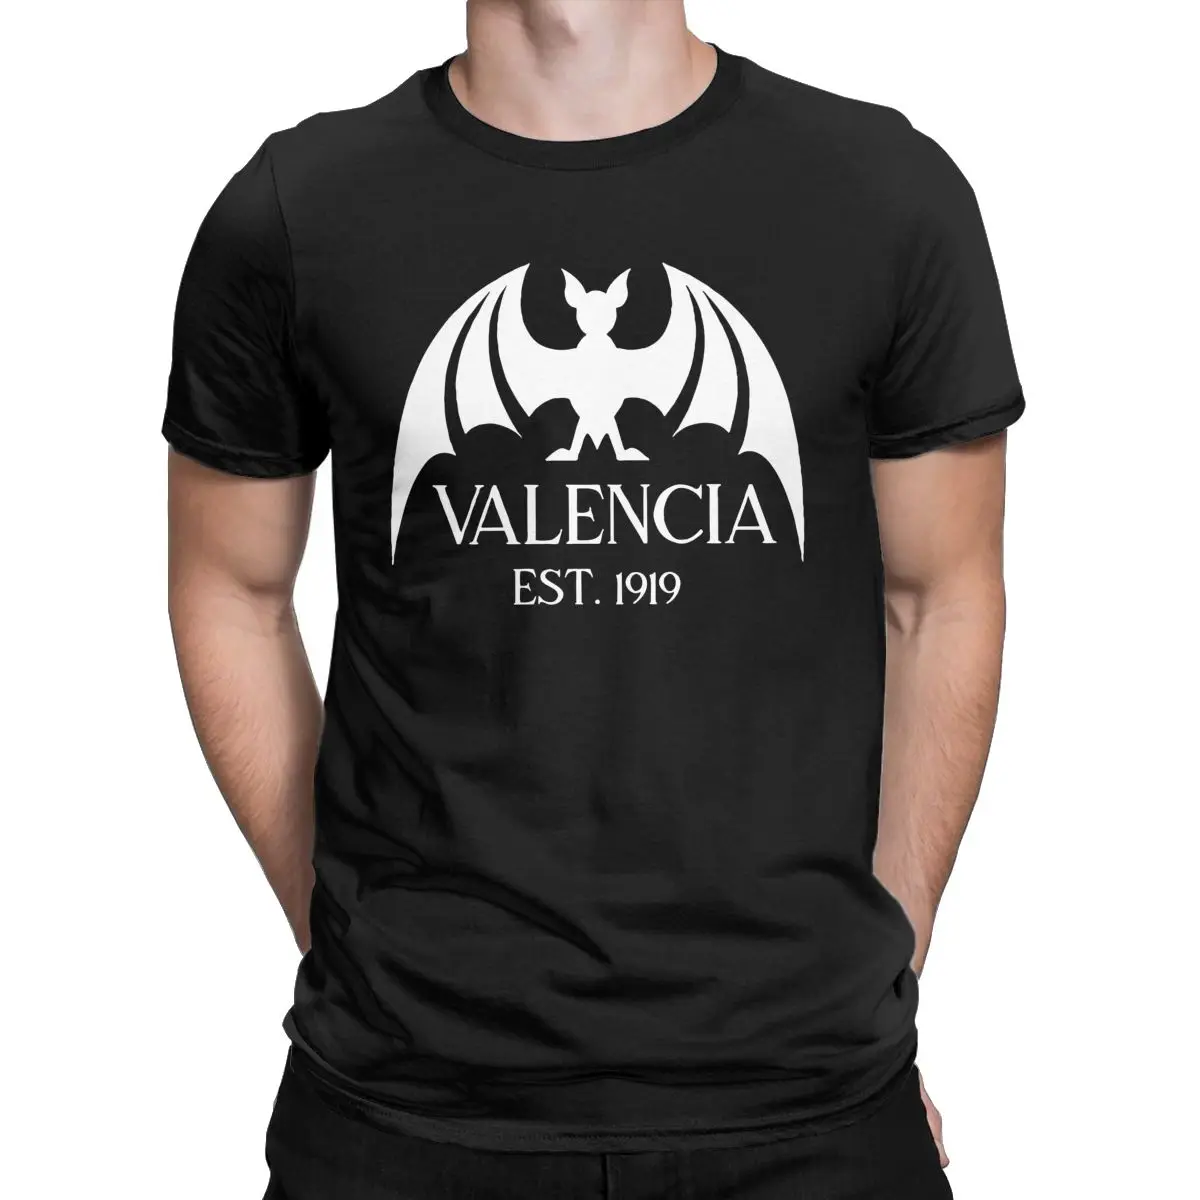 Football Club Valencia CF t shirt for men Cotton Vintage T-Shirt Crew Neck Tees Short Sleeve Tops New Arrival